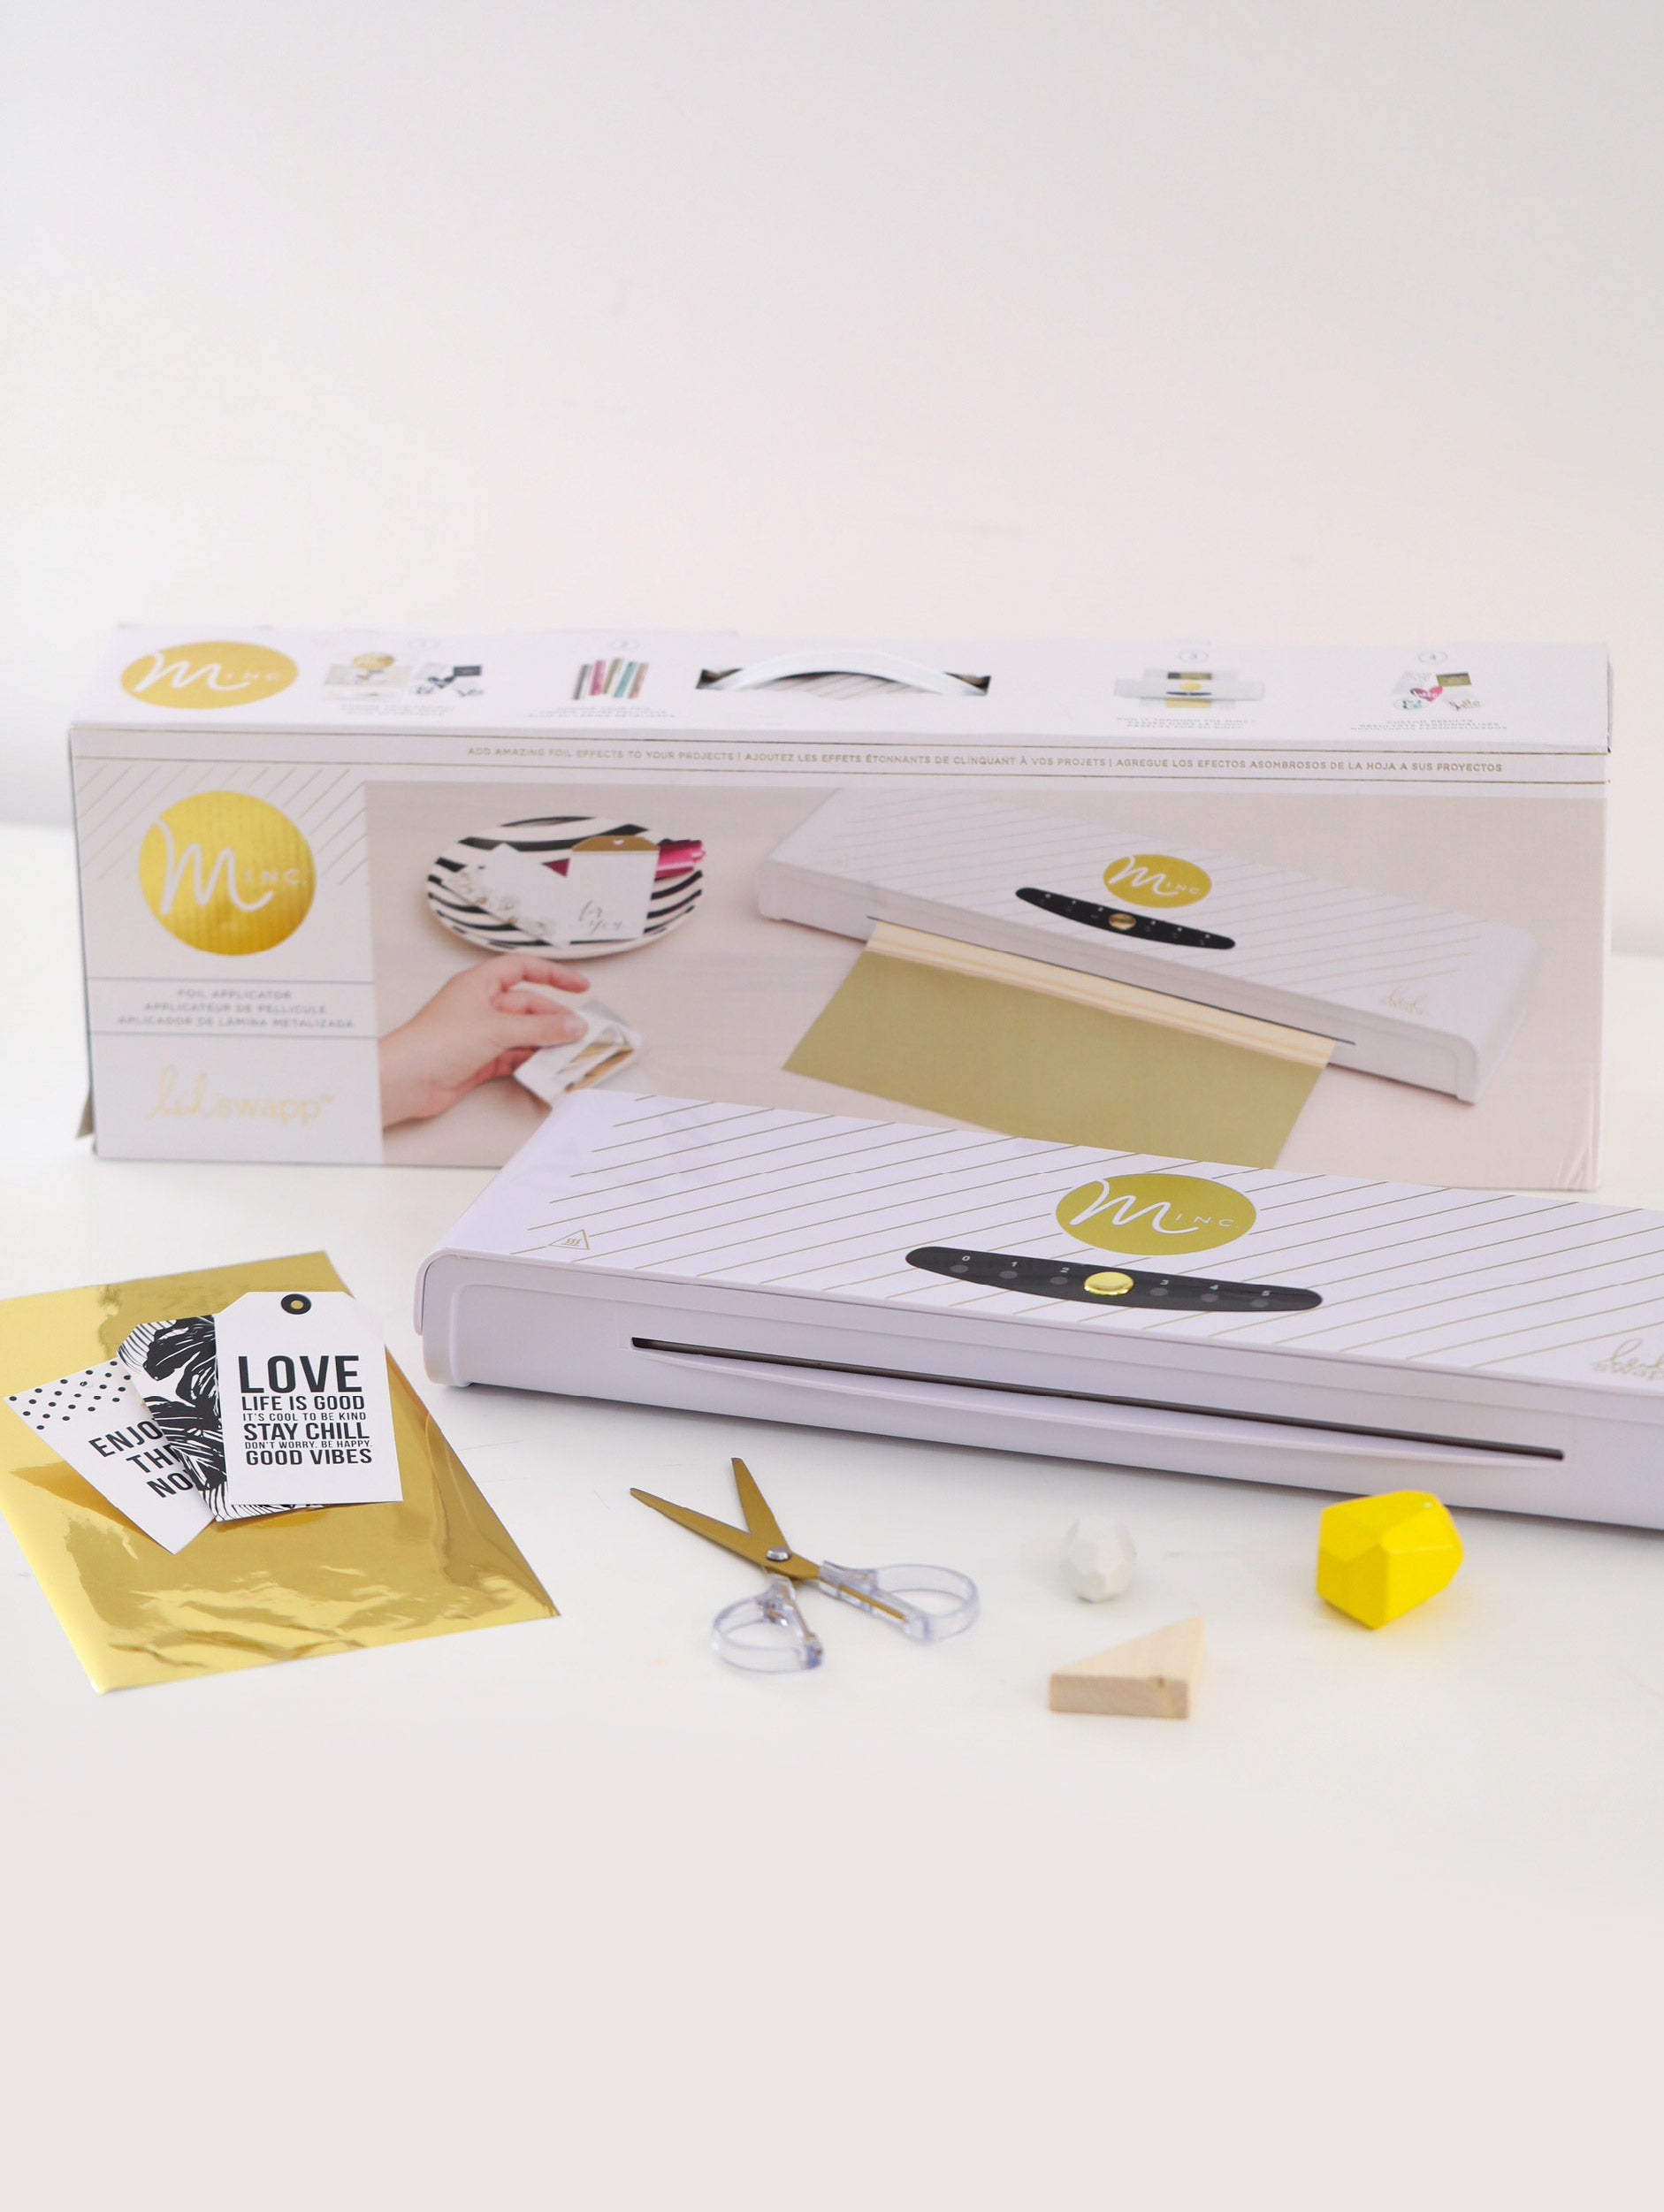 AMERICAN CRAFTS Heidi Swapp, Minc Foil Applicator and Starter Kit -12", 220v